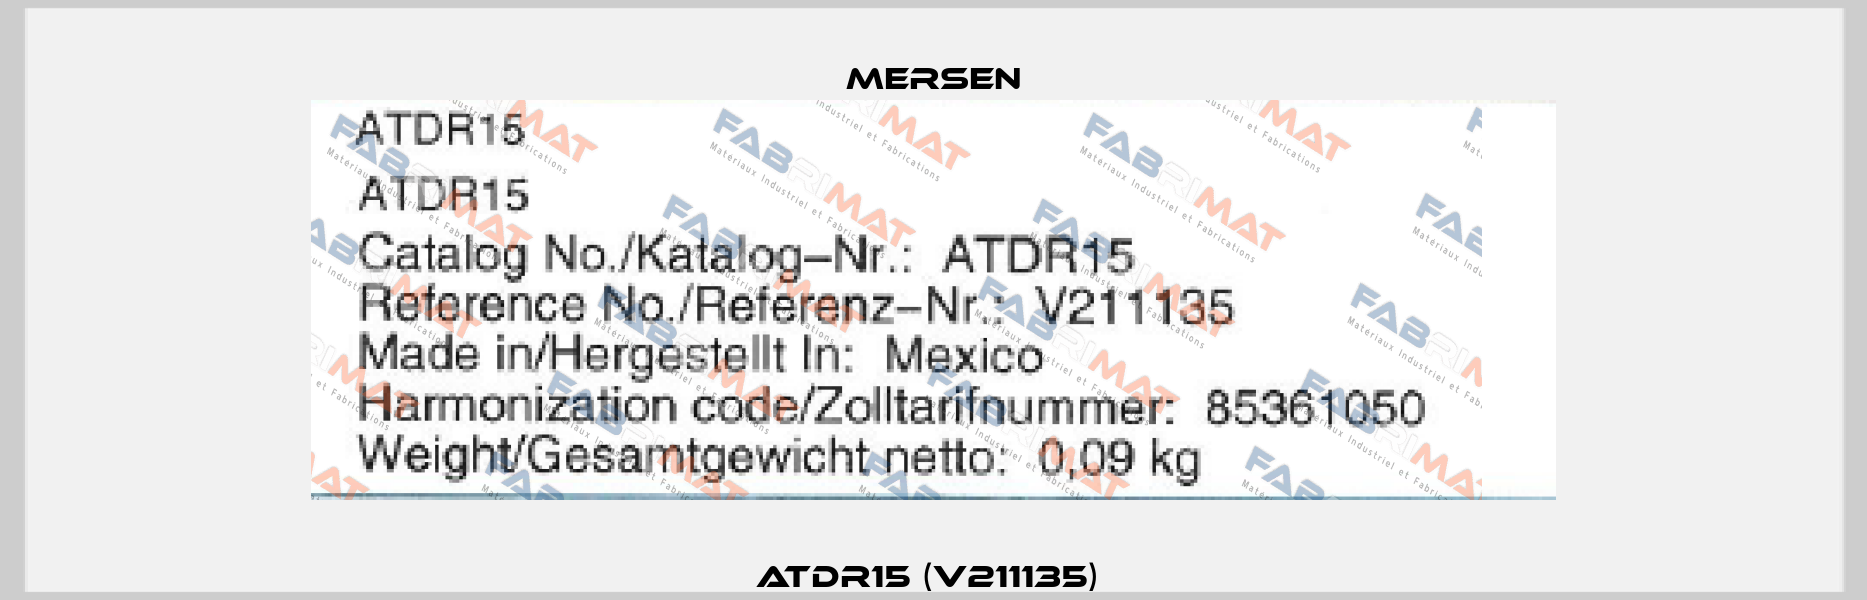 ATDR15 (V211135)  Mersen